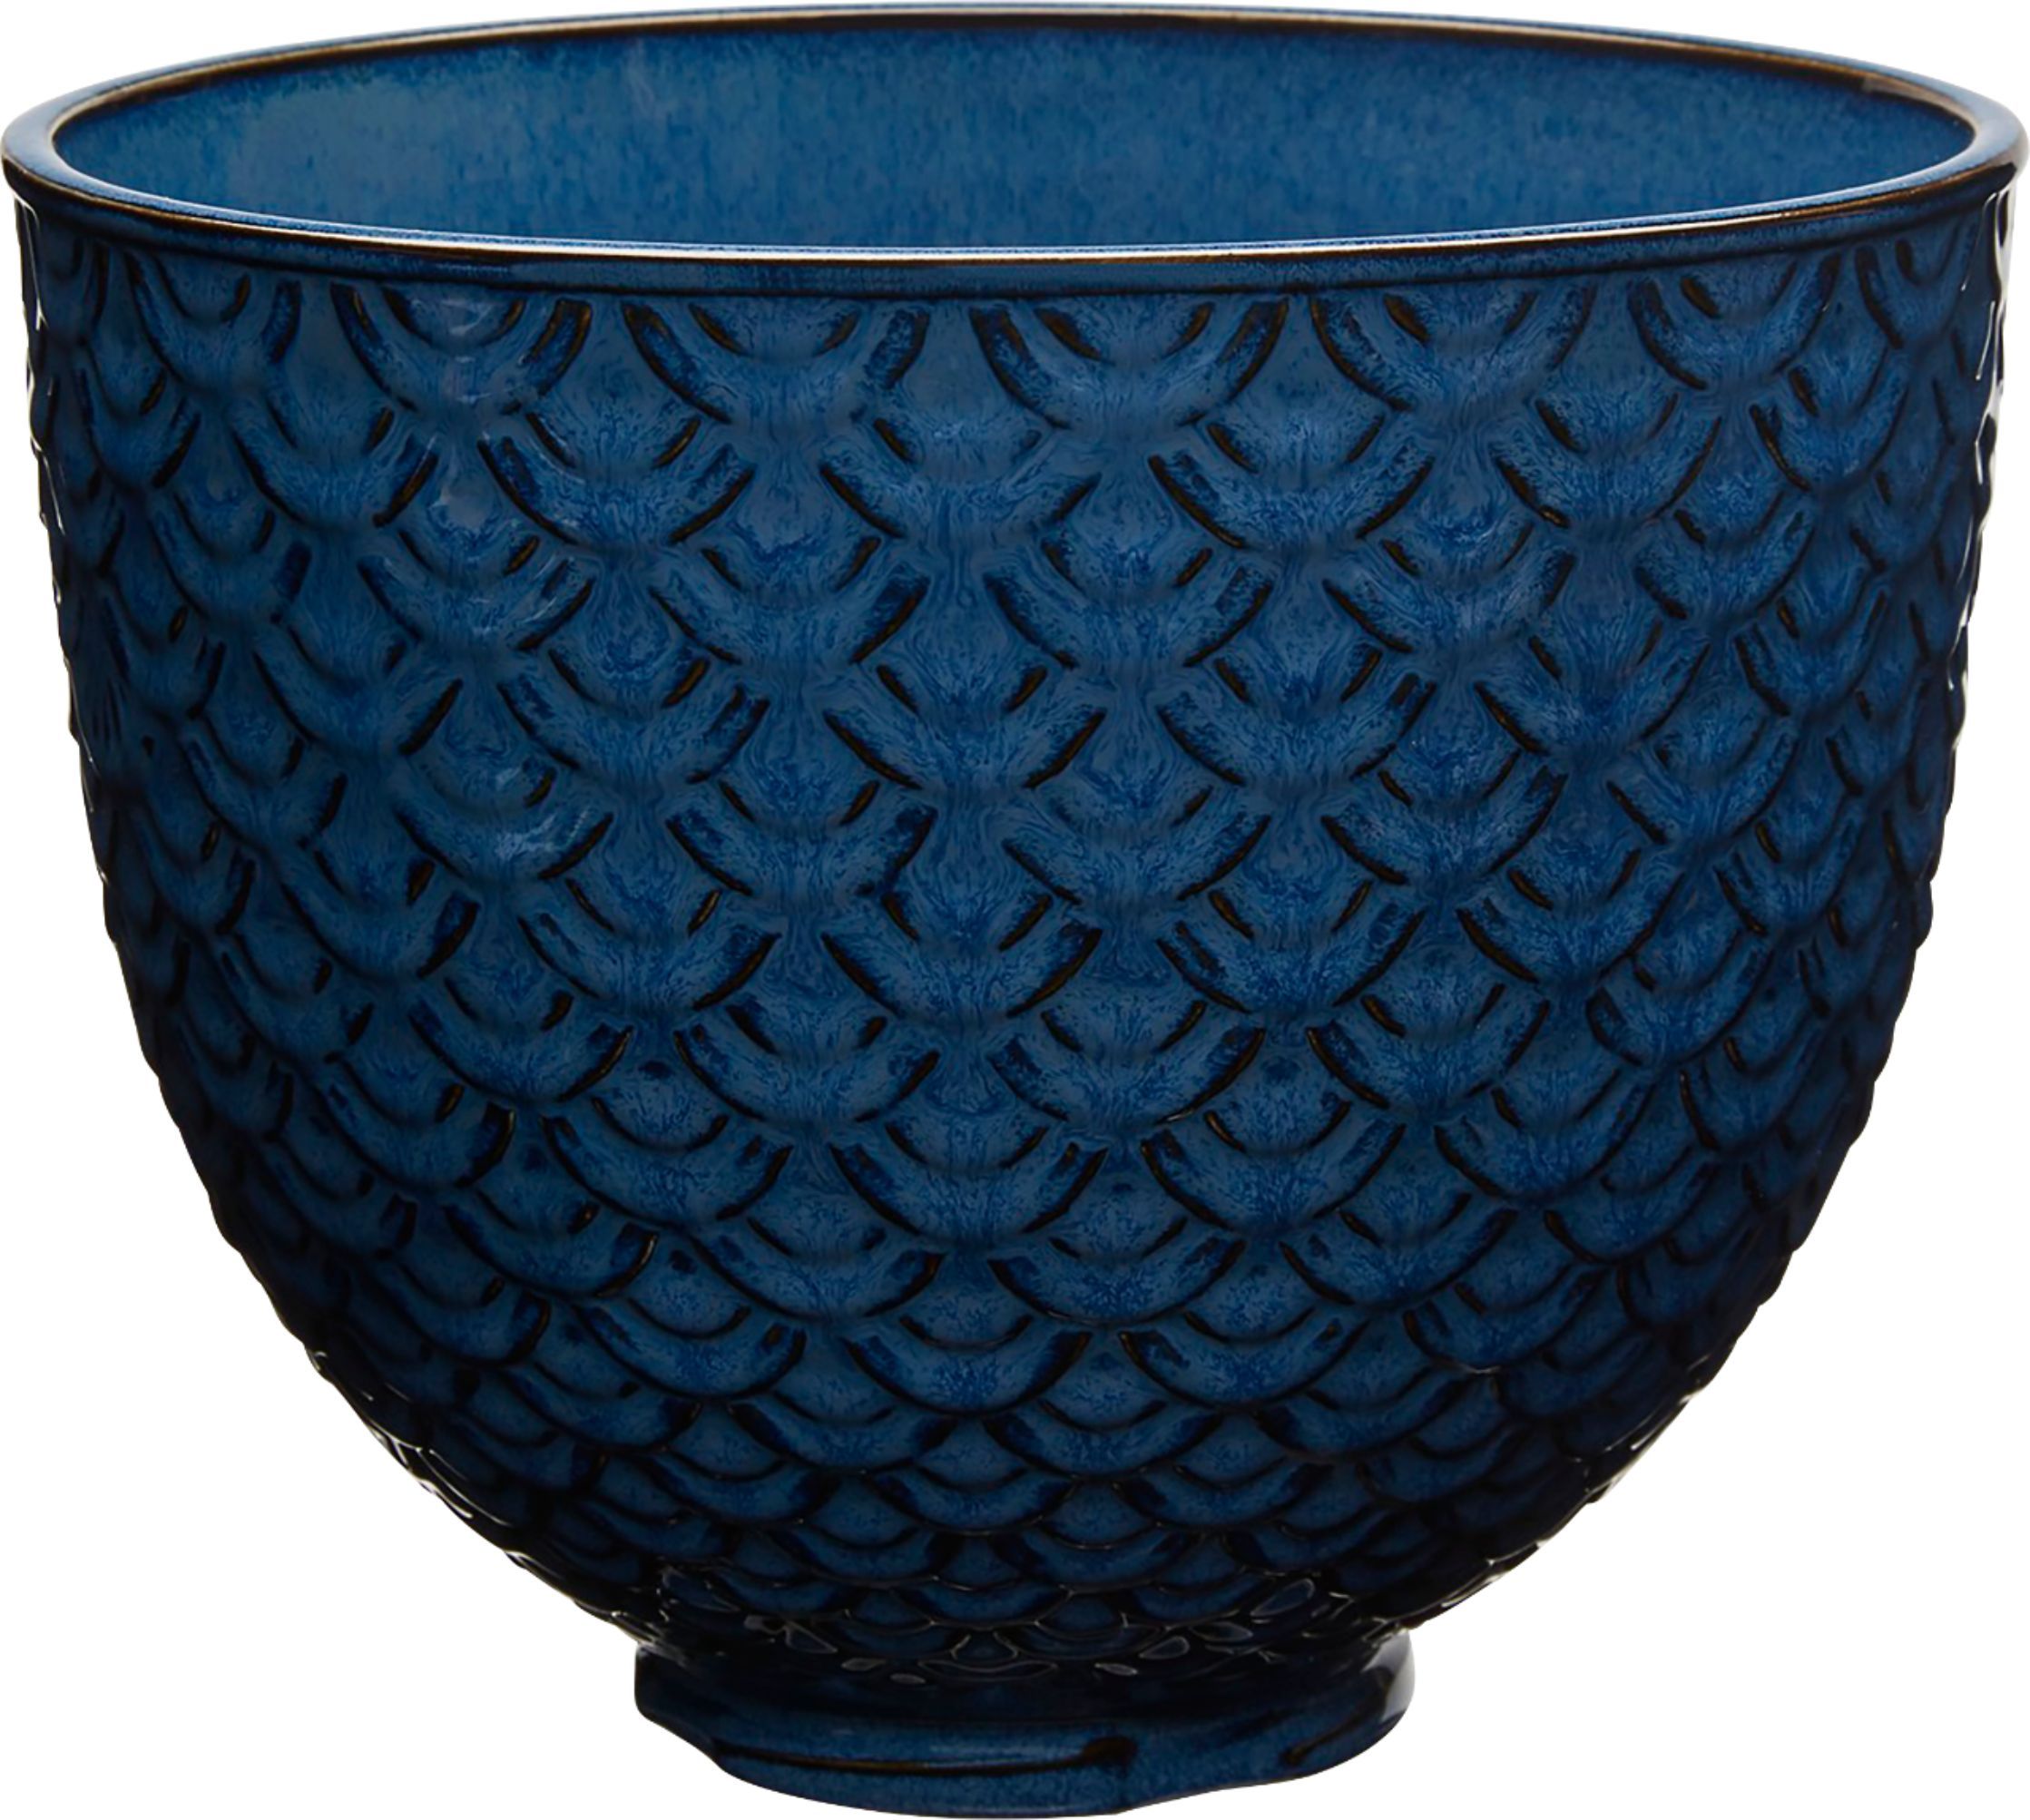 KitchenAid 5-Quart Textured Ceramic Bowl Blue Mermaid Lace KSM2CB5TML - Best Buy | Best Buy U.S.